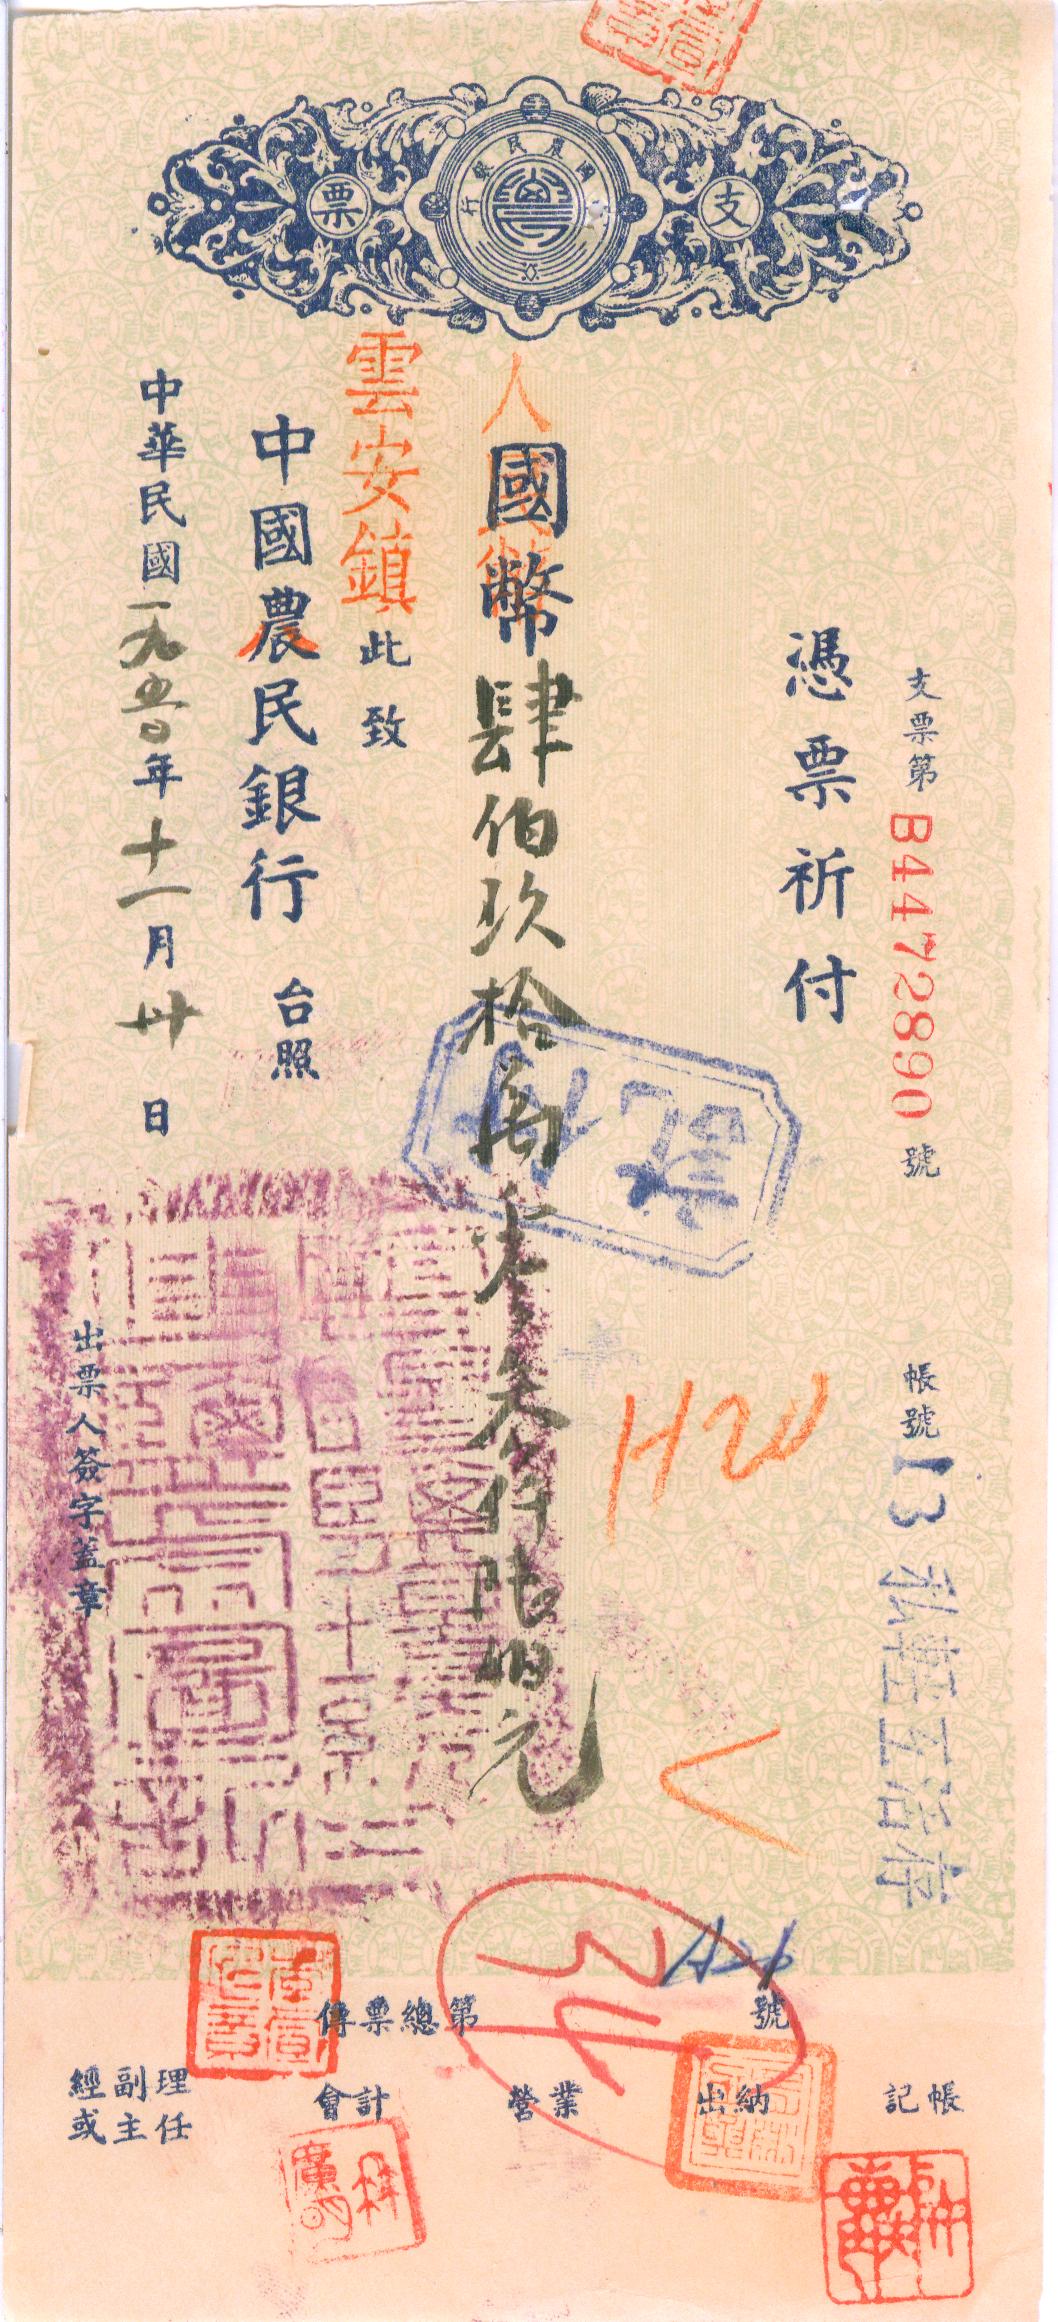 D1022, Farmer's Bank of China, Chongqing Branch, Check of 1950